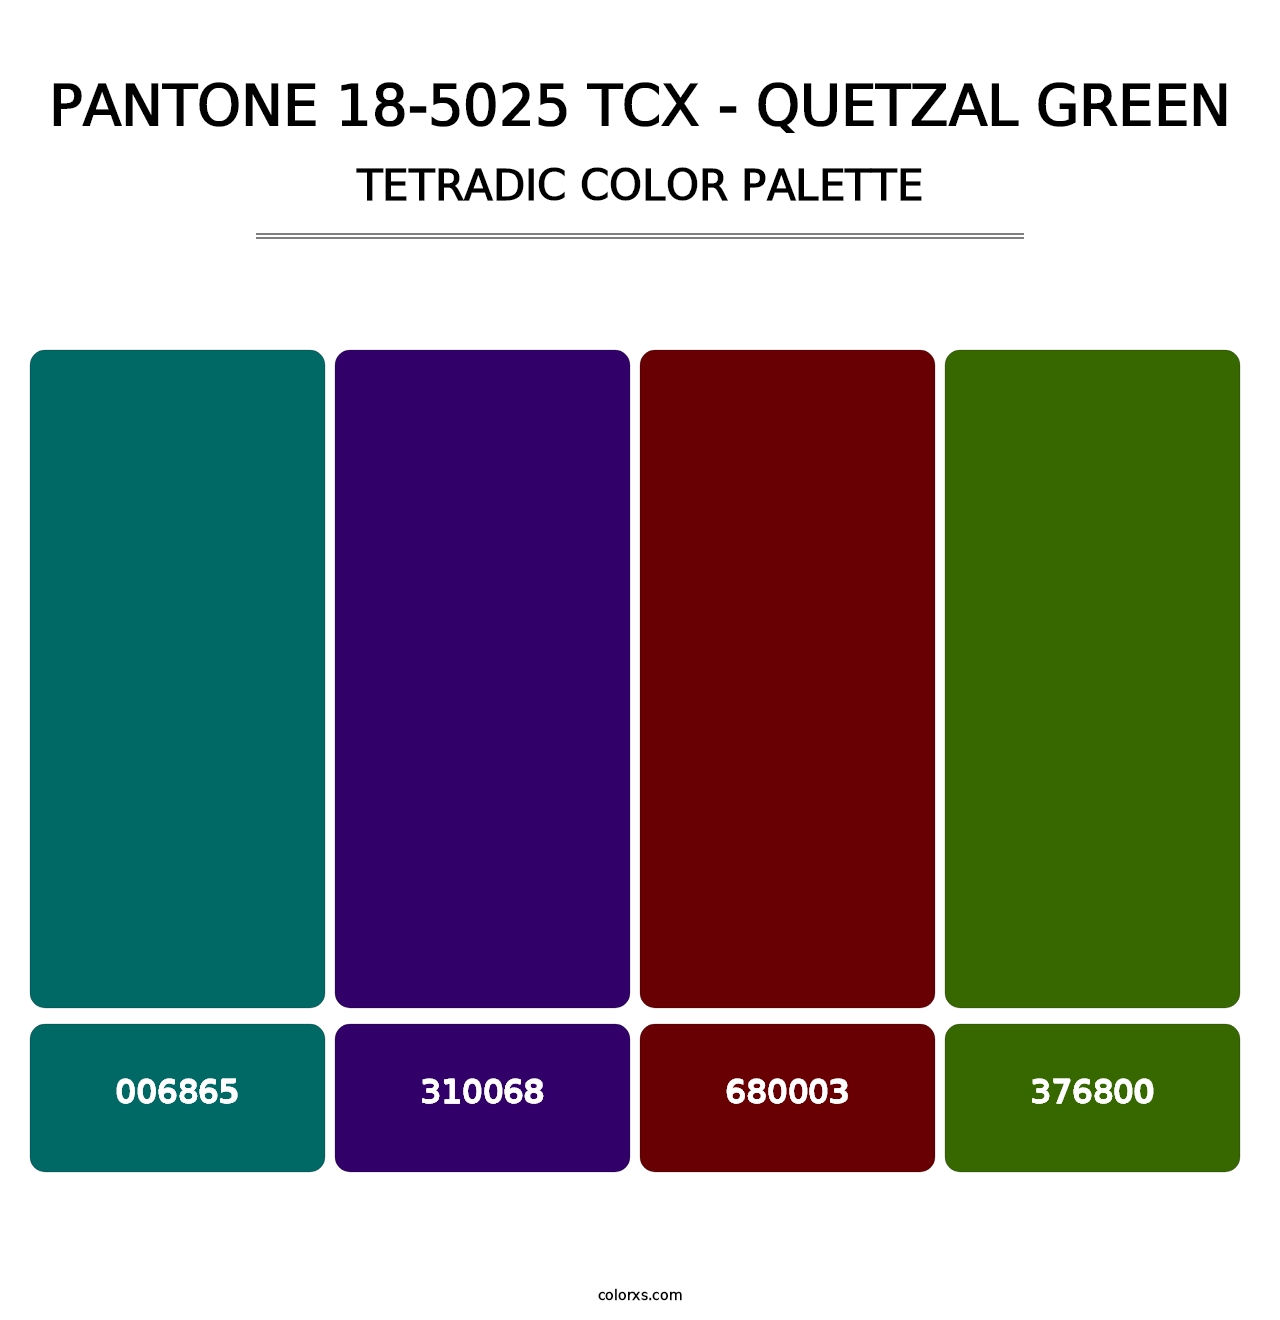 PANTONE 18-5025 TCX - Quetzal Green - Tetradic Color Palette